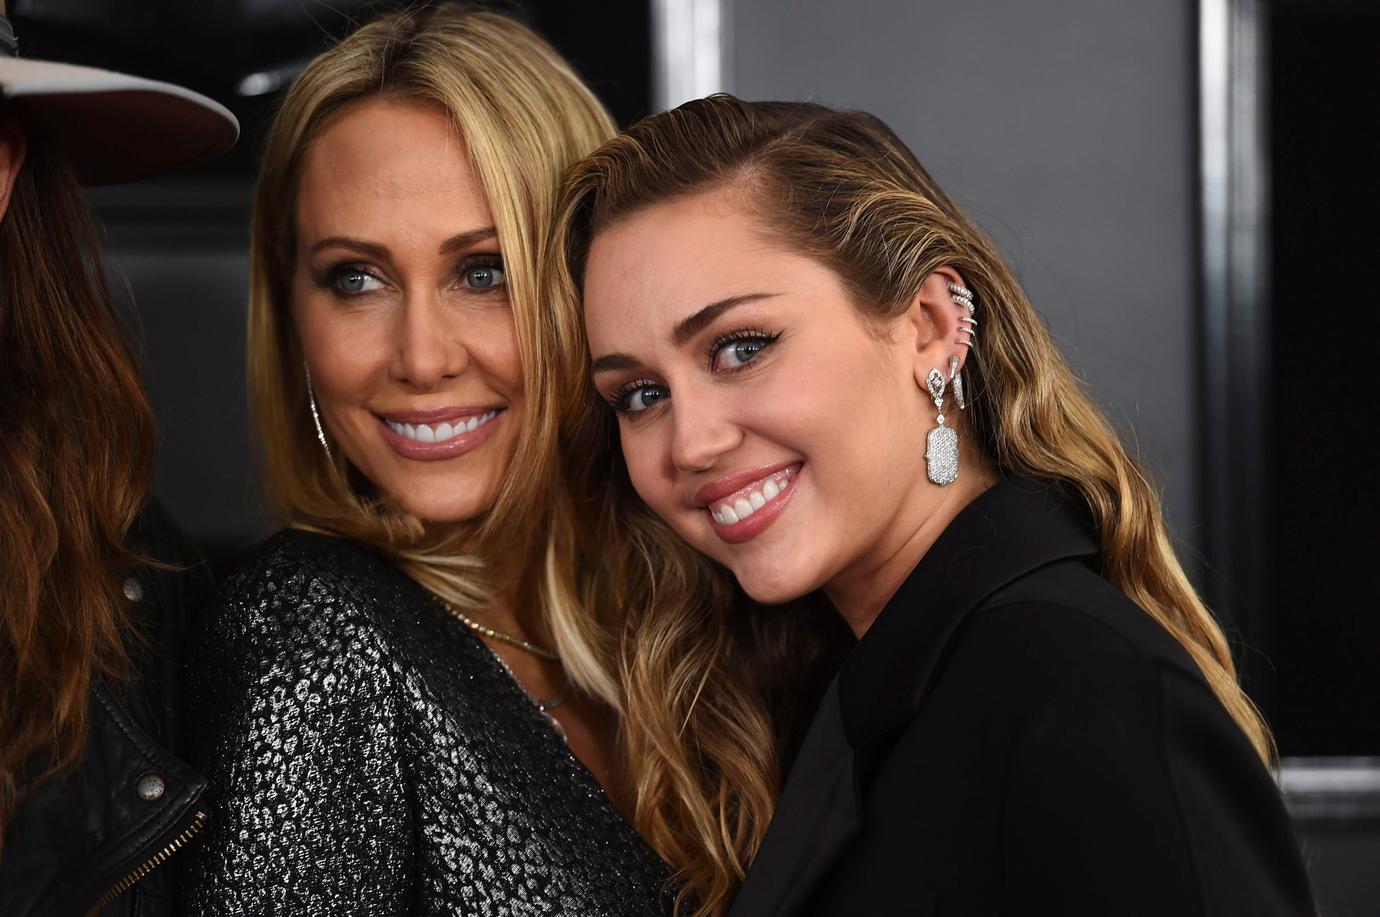 Tish Cyrus and Miley Cyrus Pose Smiling Closeup Grammy Awards Red Carpet